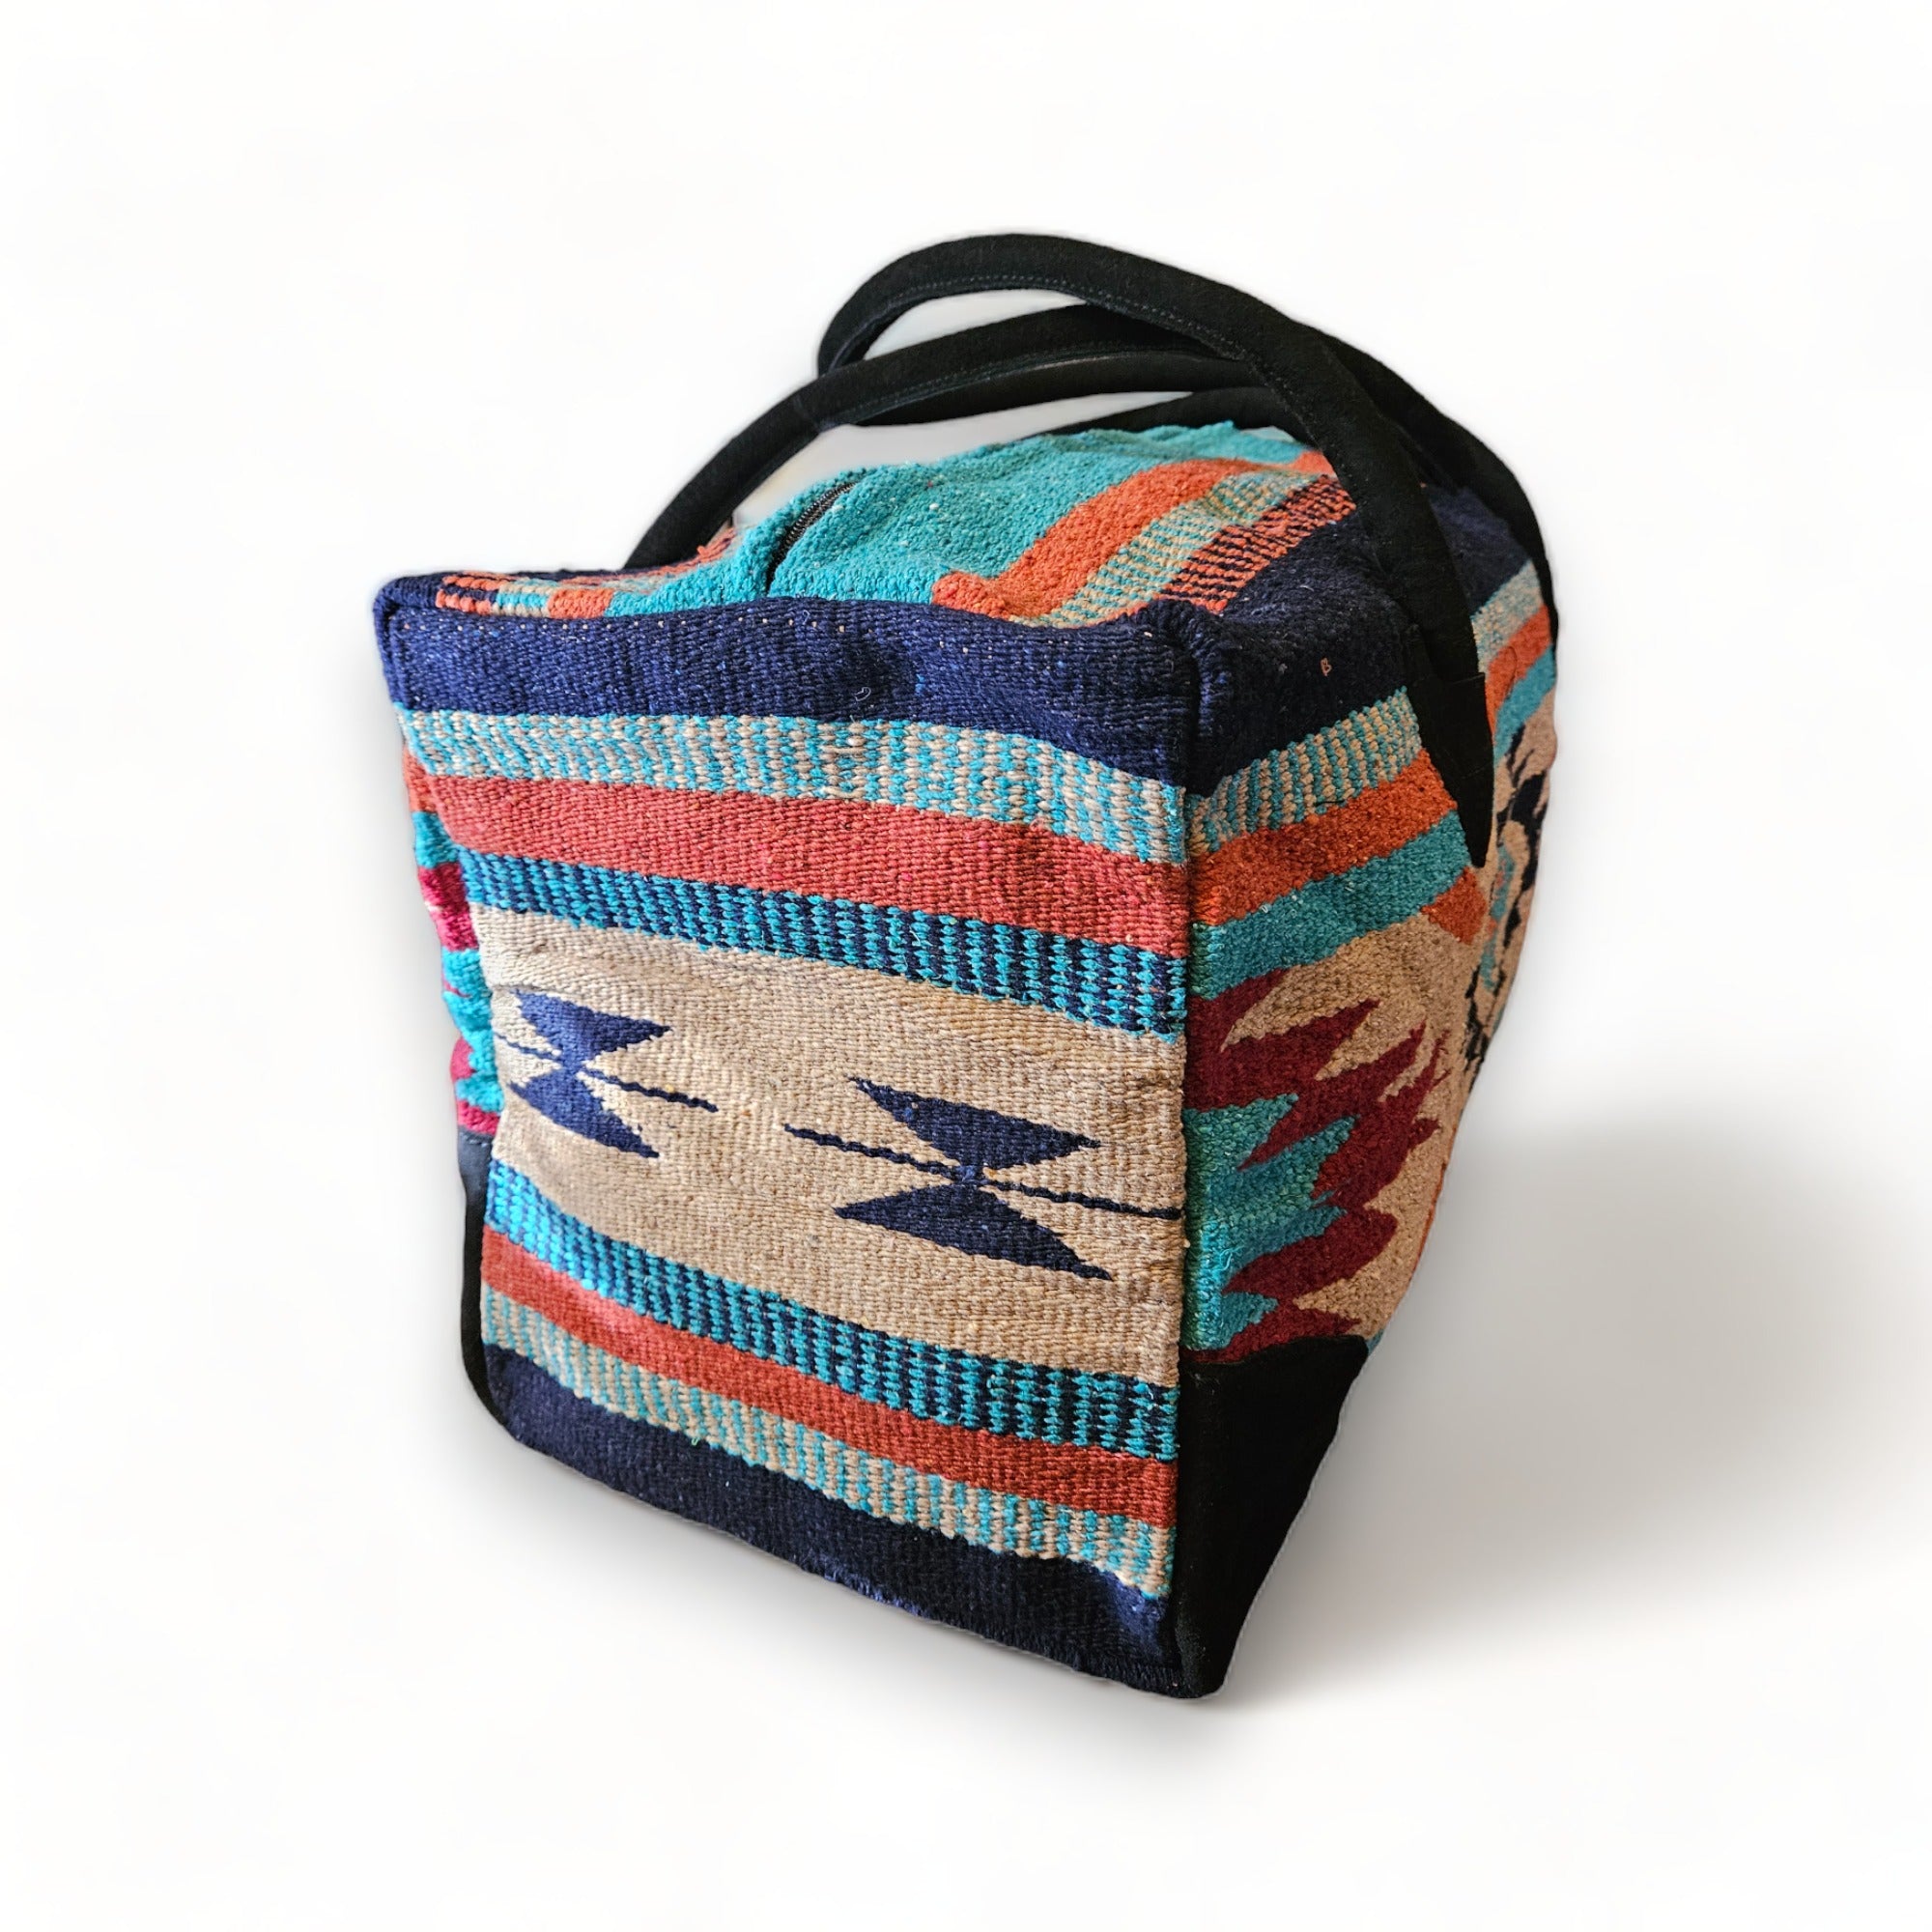 Southwestern Large Weekender Travel Bag Duffle Bag Boho Travel Bag- The Cheyenne Go West Weekender - Ranch Junkie Mercantile LLC